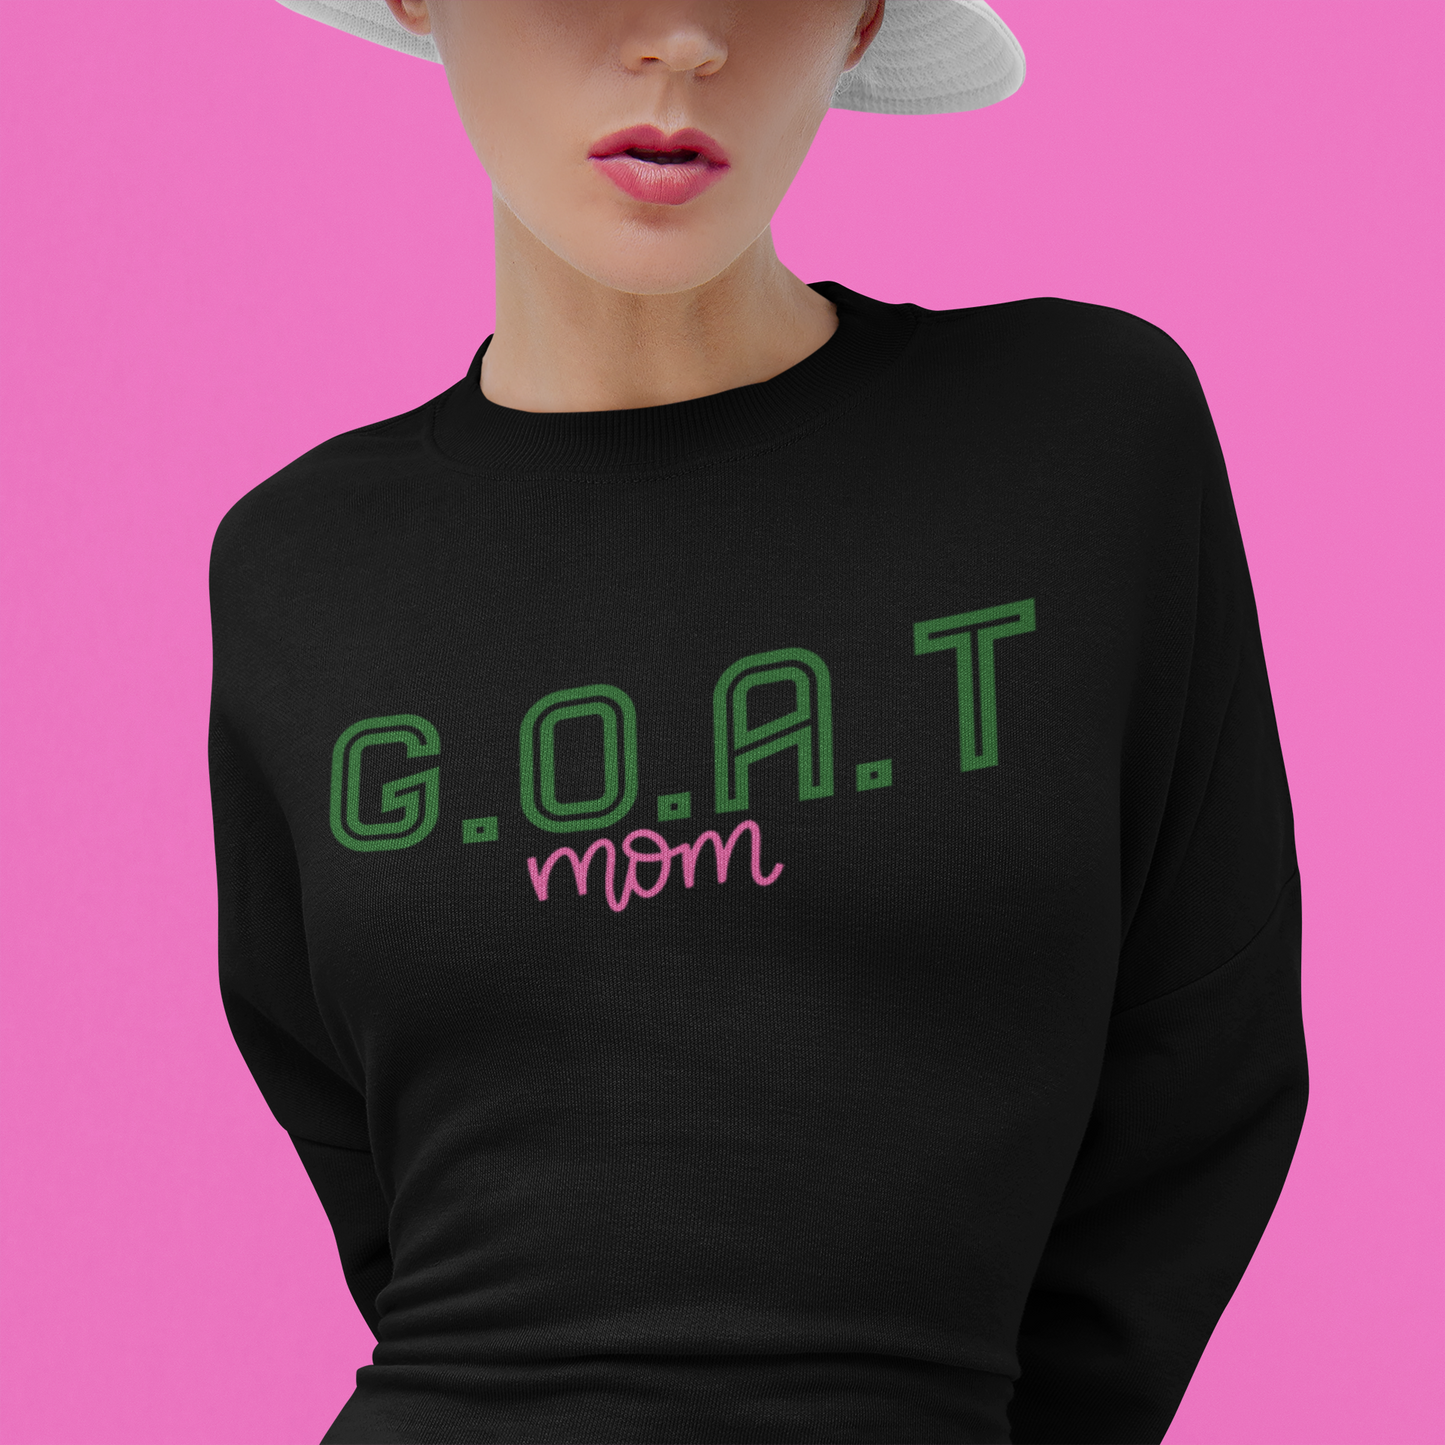 Women Sweatshirt G.O.A.T Mom Print